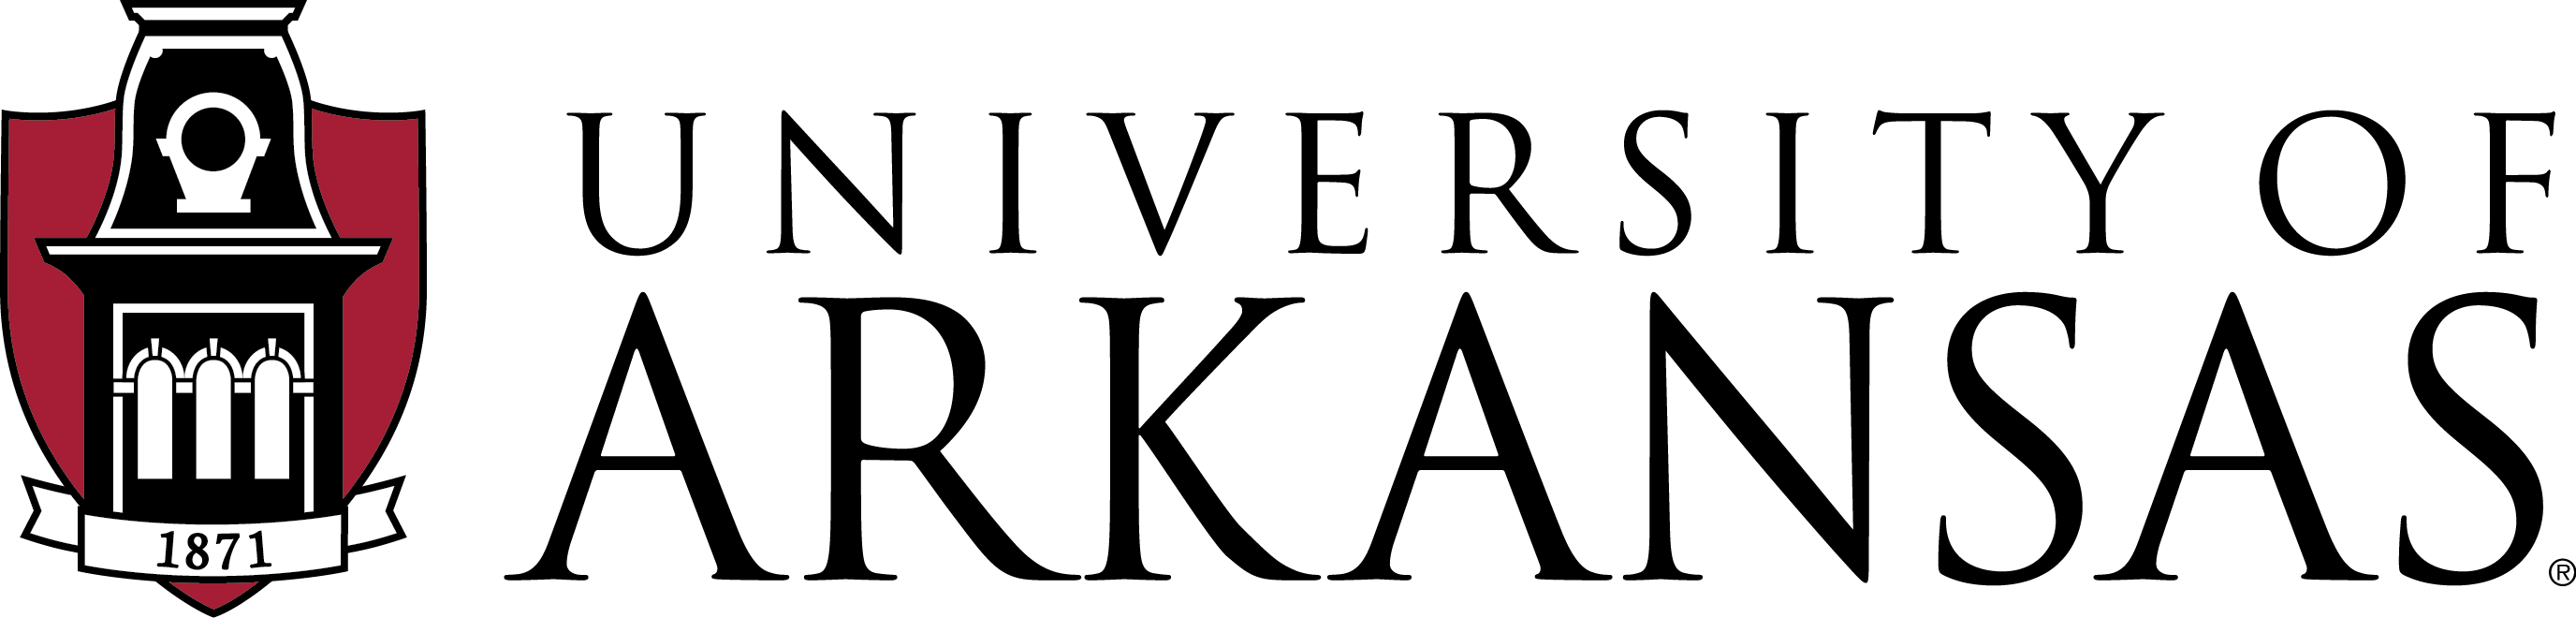 University of Arkansas Logo - Downloads | Style Guides and Logos | University of Arkansas